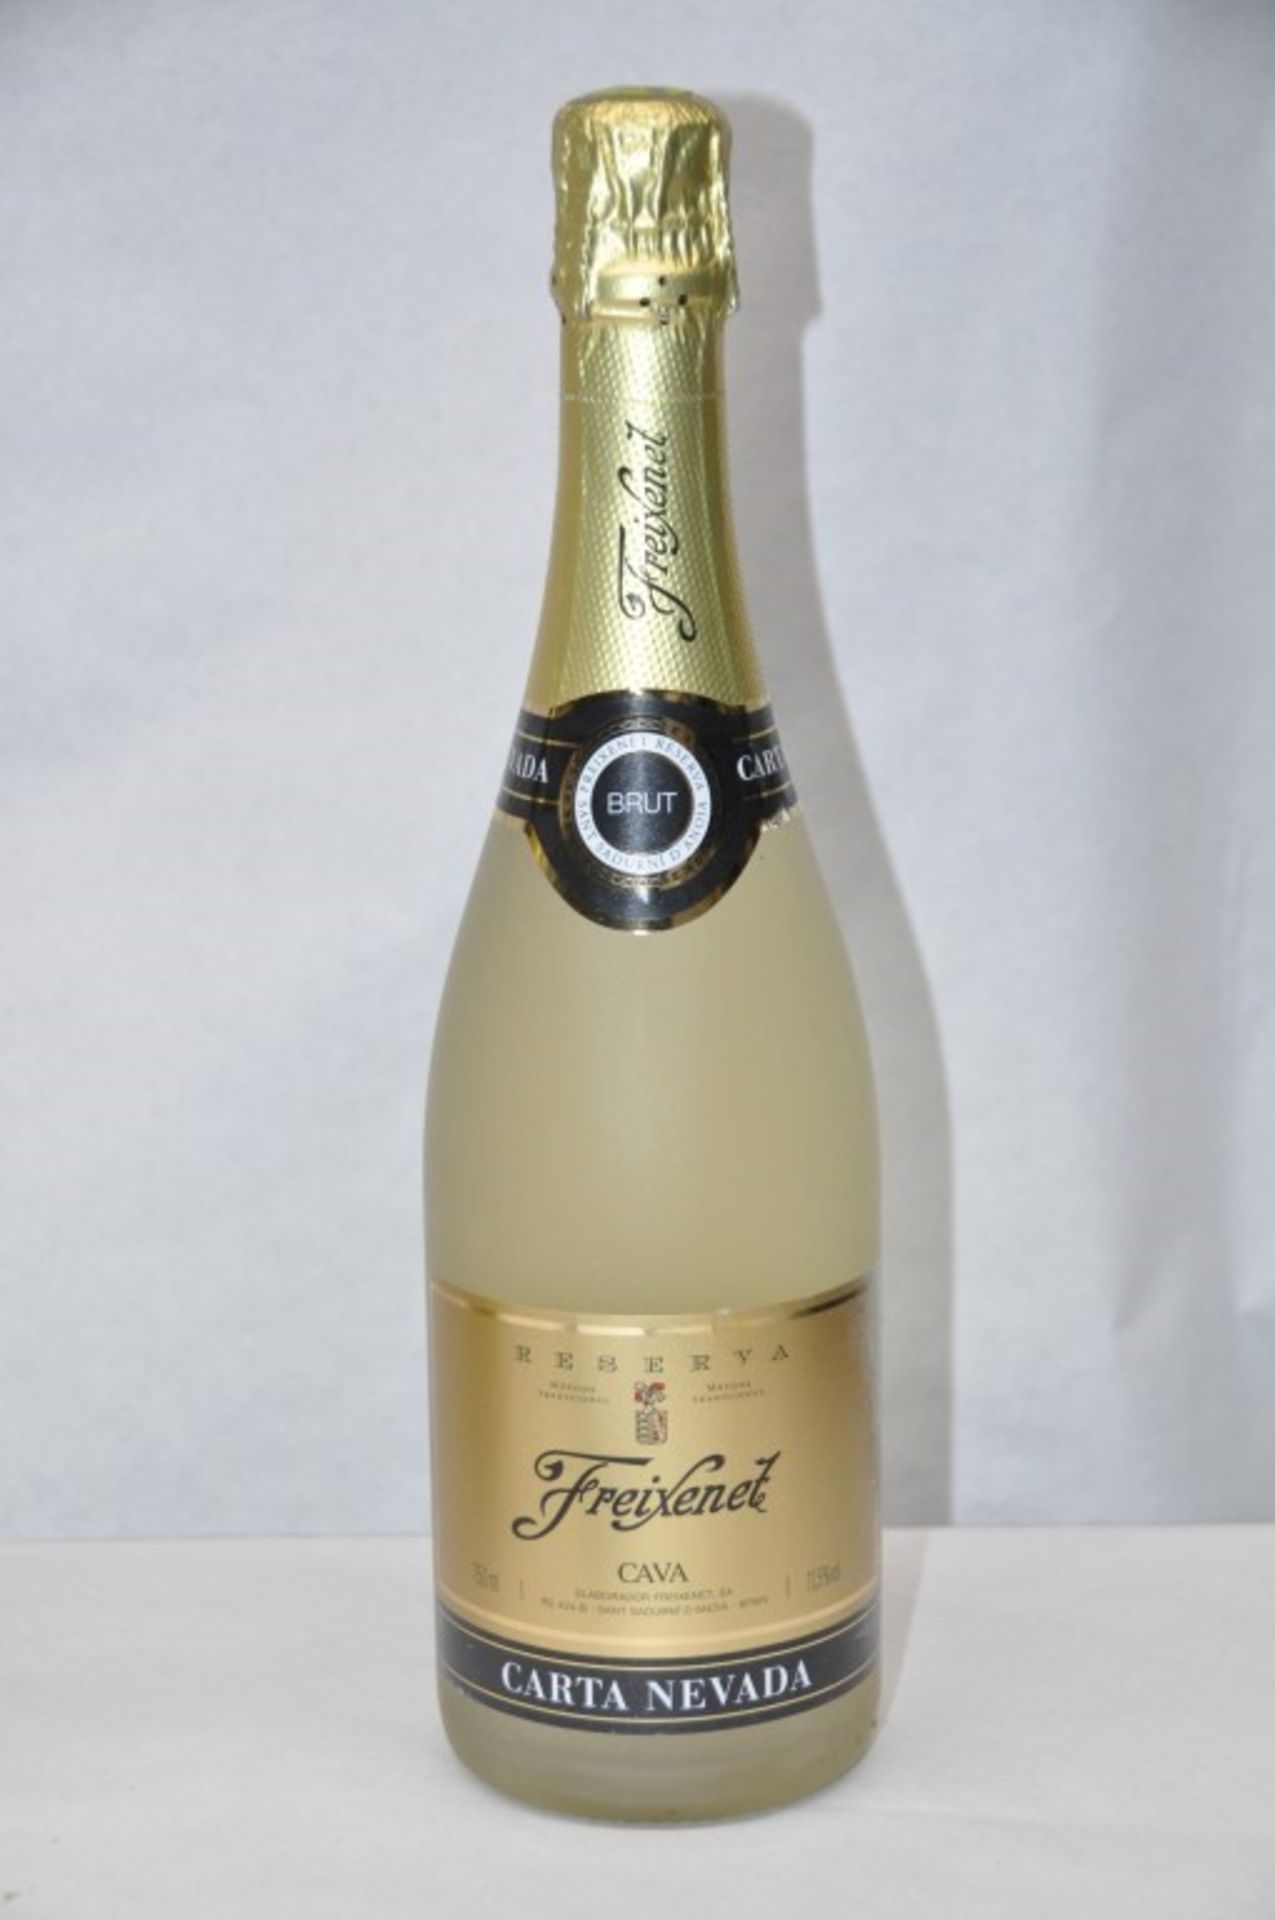 1 x Reserva Freixenet Carta Nevada Cava - 75cl Bottle - Sealed UK Stock - 11.5% Volume - CL103 - Ref